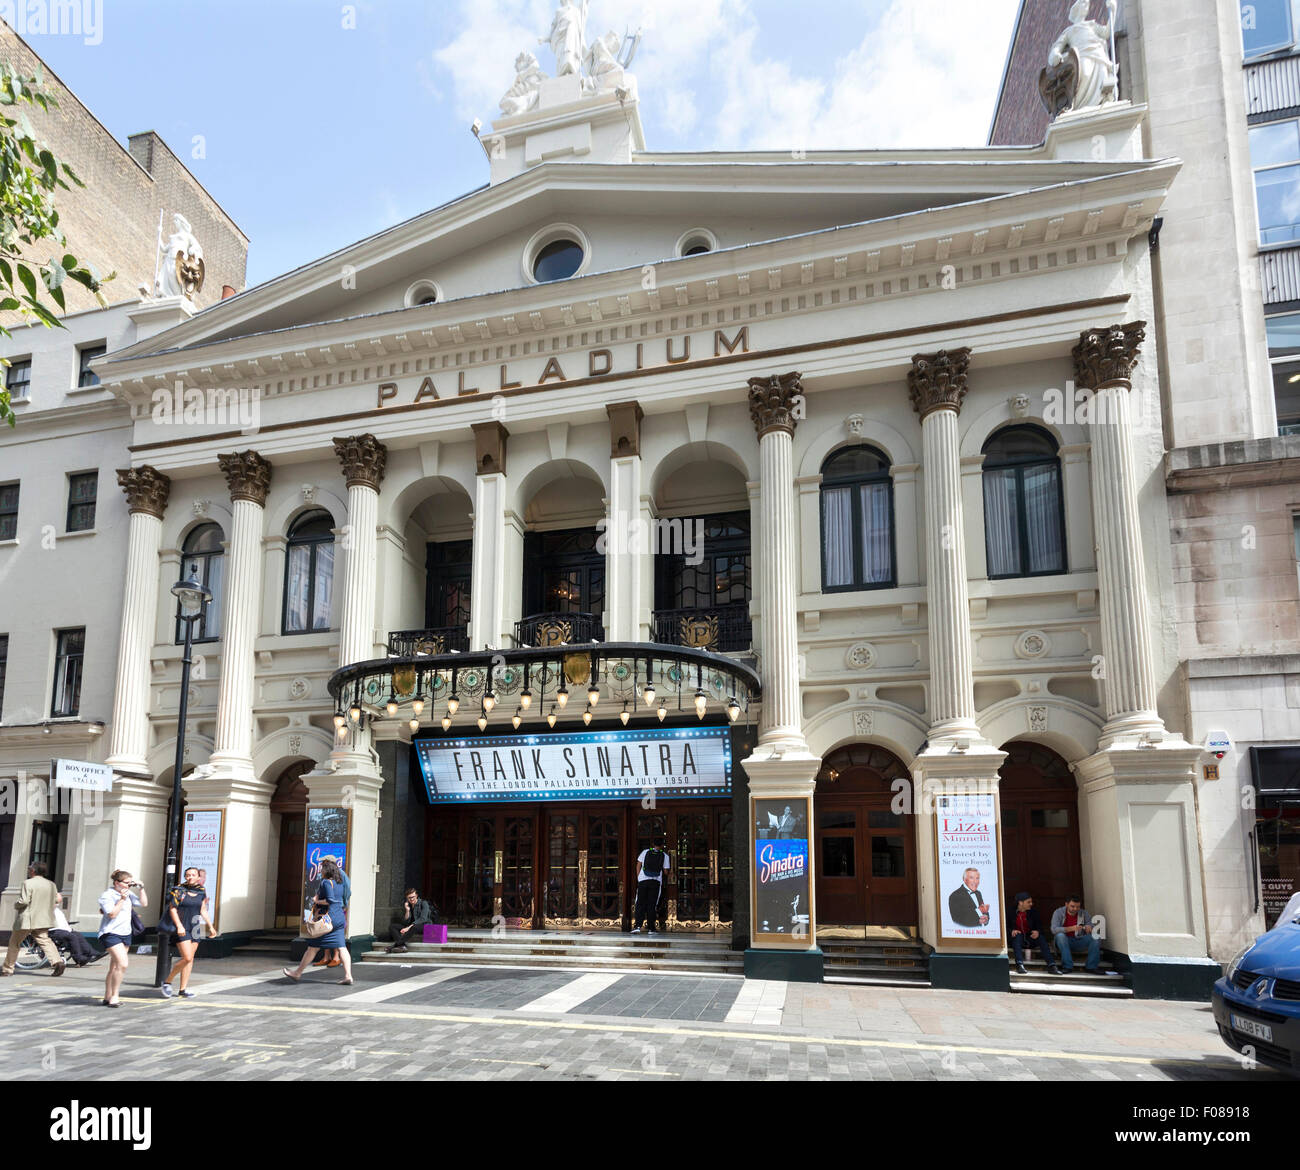 London Palladium Theatre Stock Photo